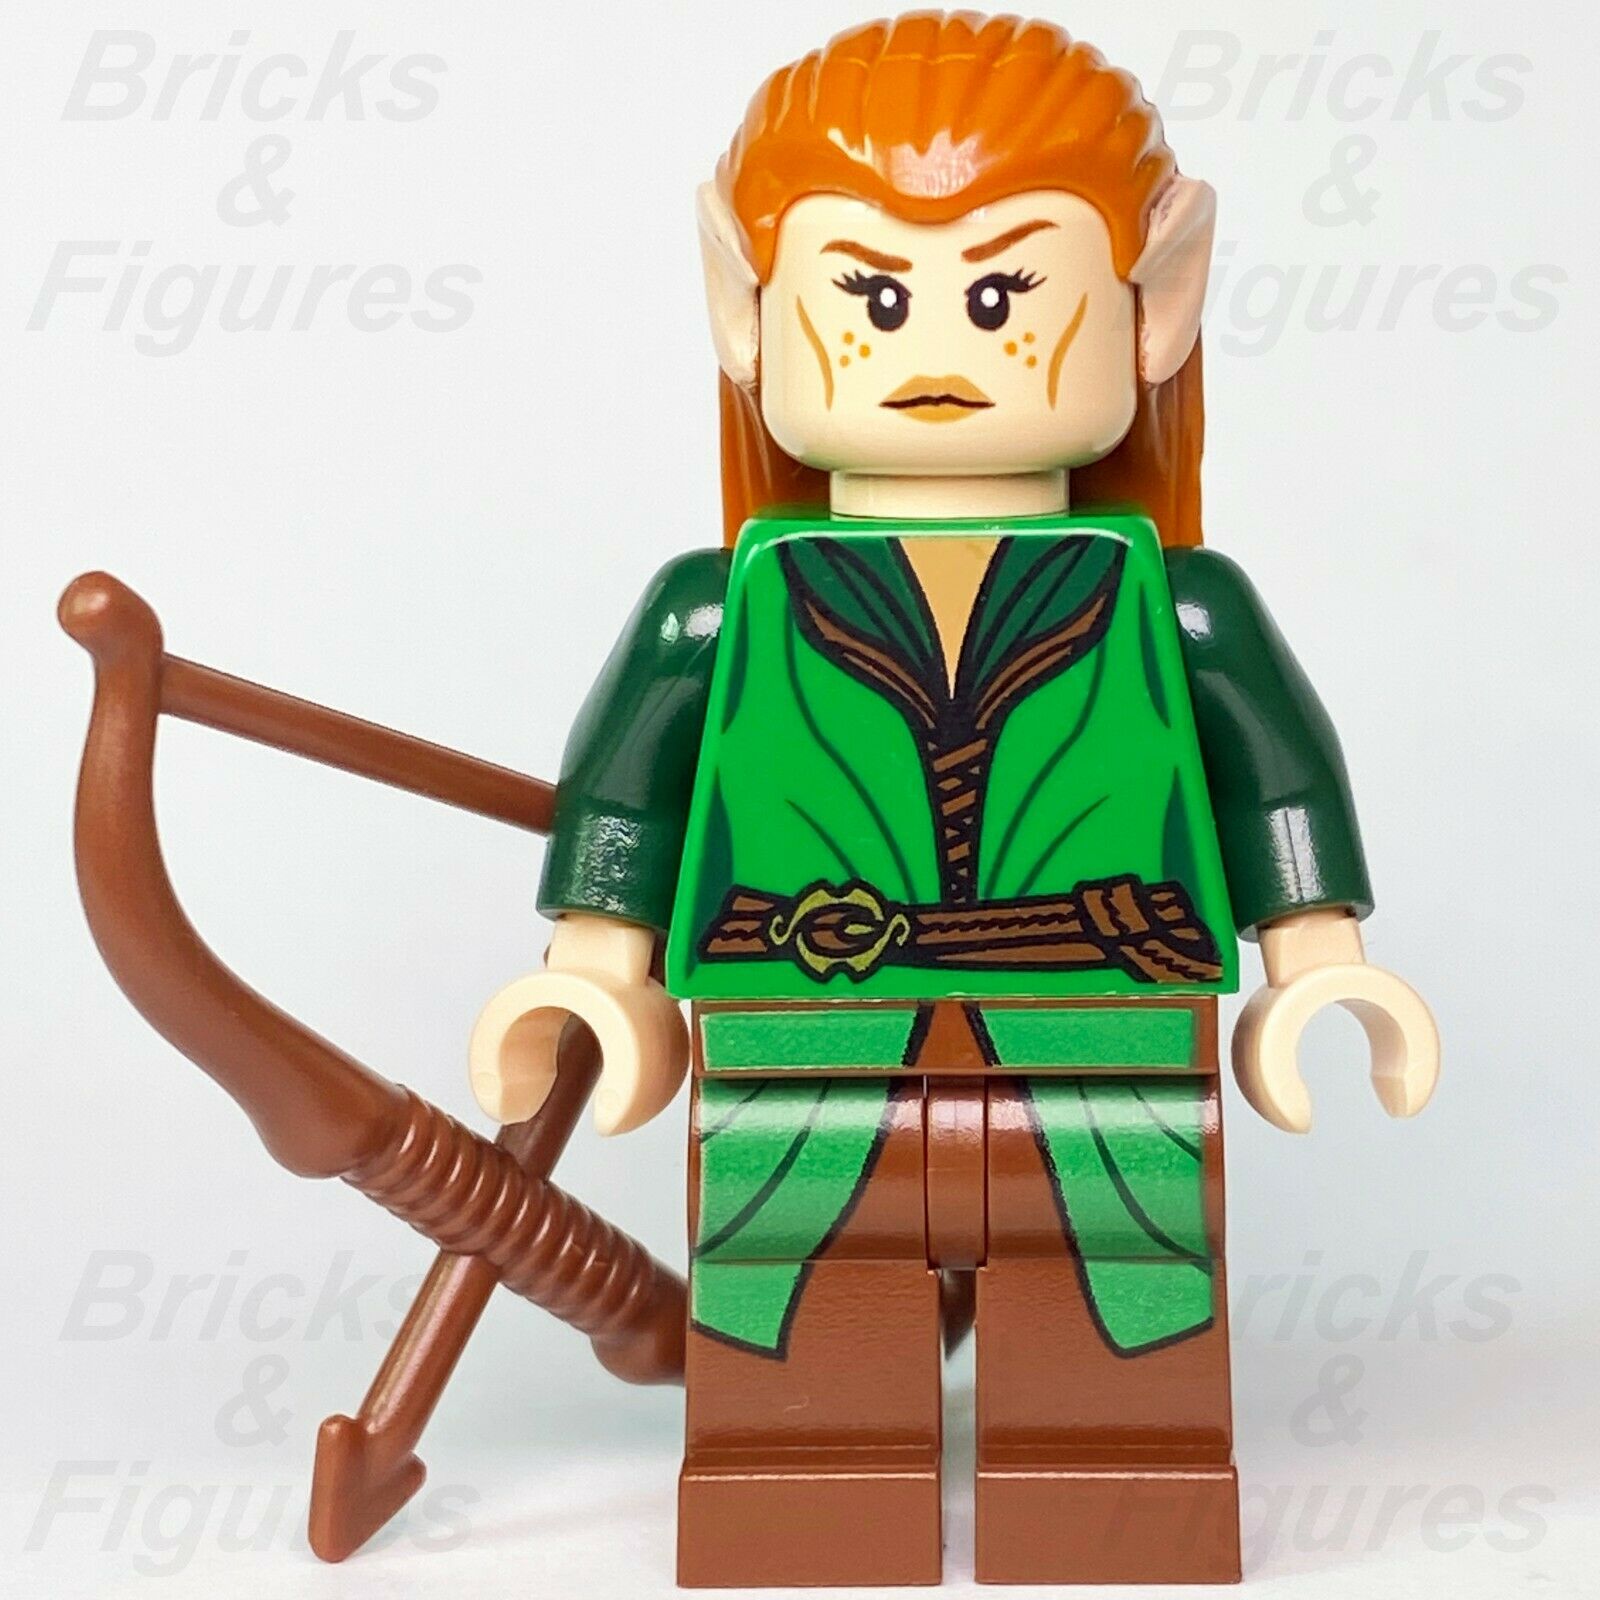 New The Hobbit Lord of the Rings LEGO Tauriel Mirkwood Elf Minifigure 79016 - Bricks & Figures